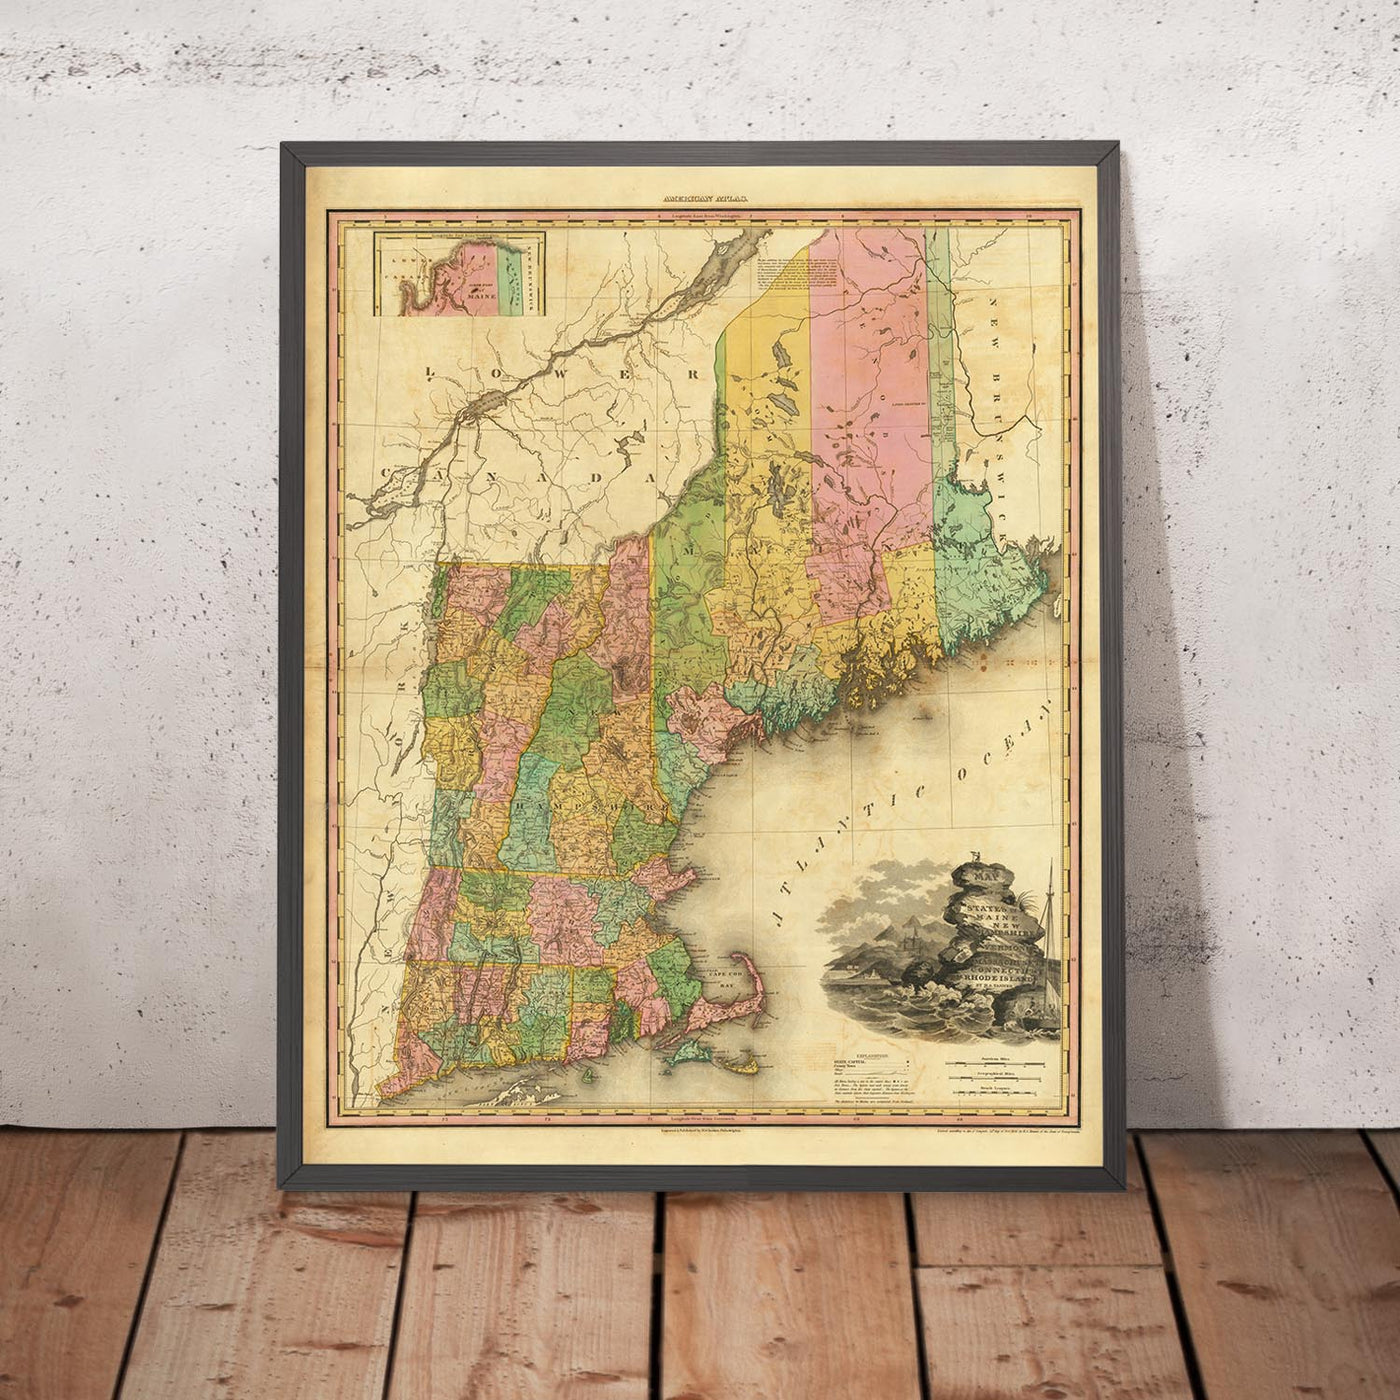 Ancienne carte de la Nouvelle Angleterre par H. S. Tanner, 1820 - Boston, Providence, Hartford, Portland, Worcester